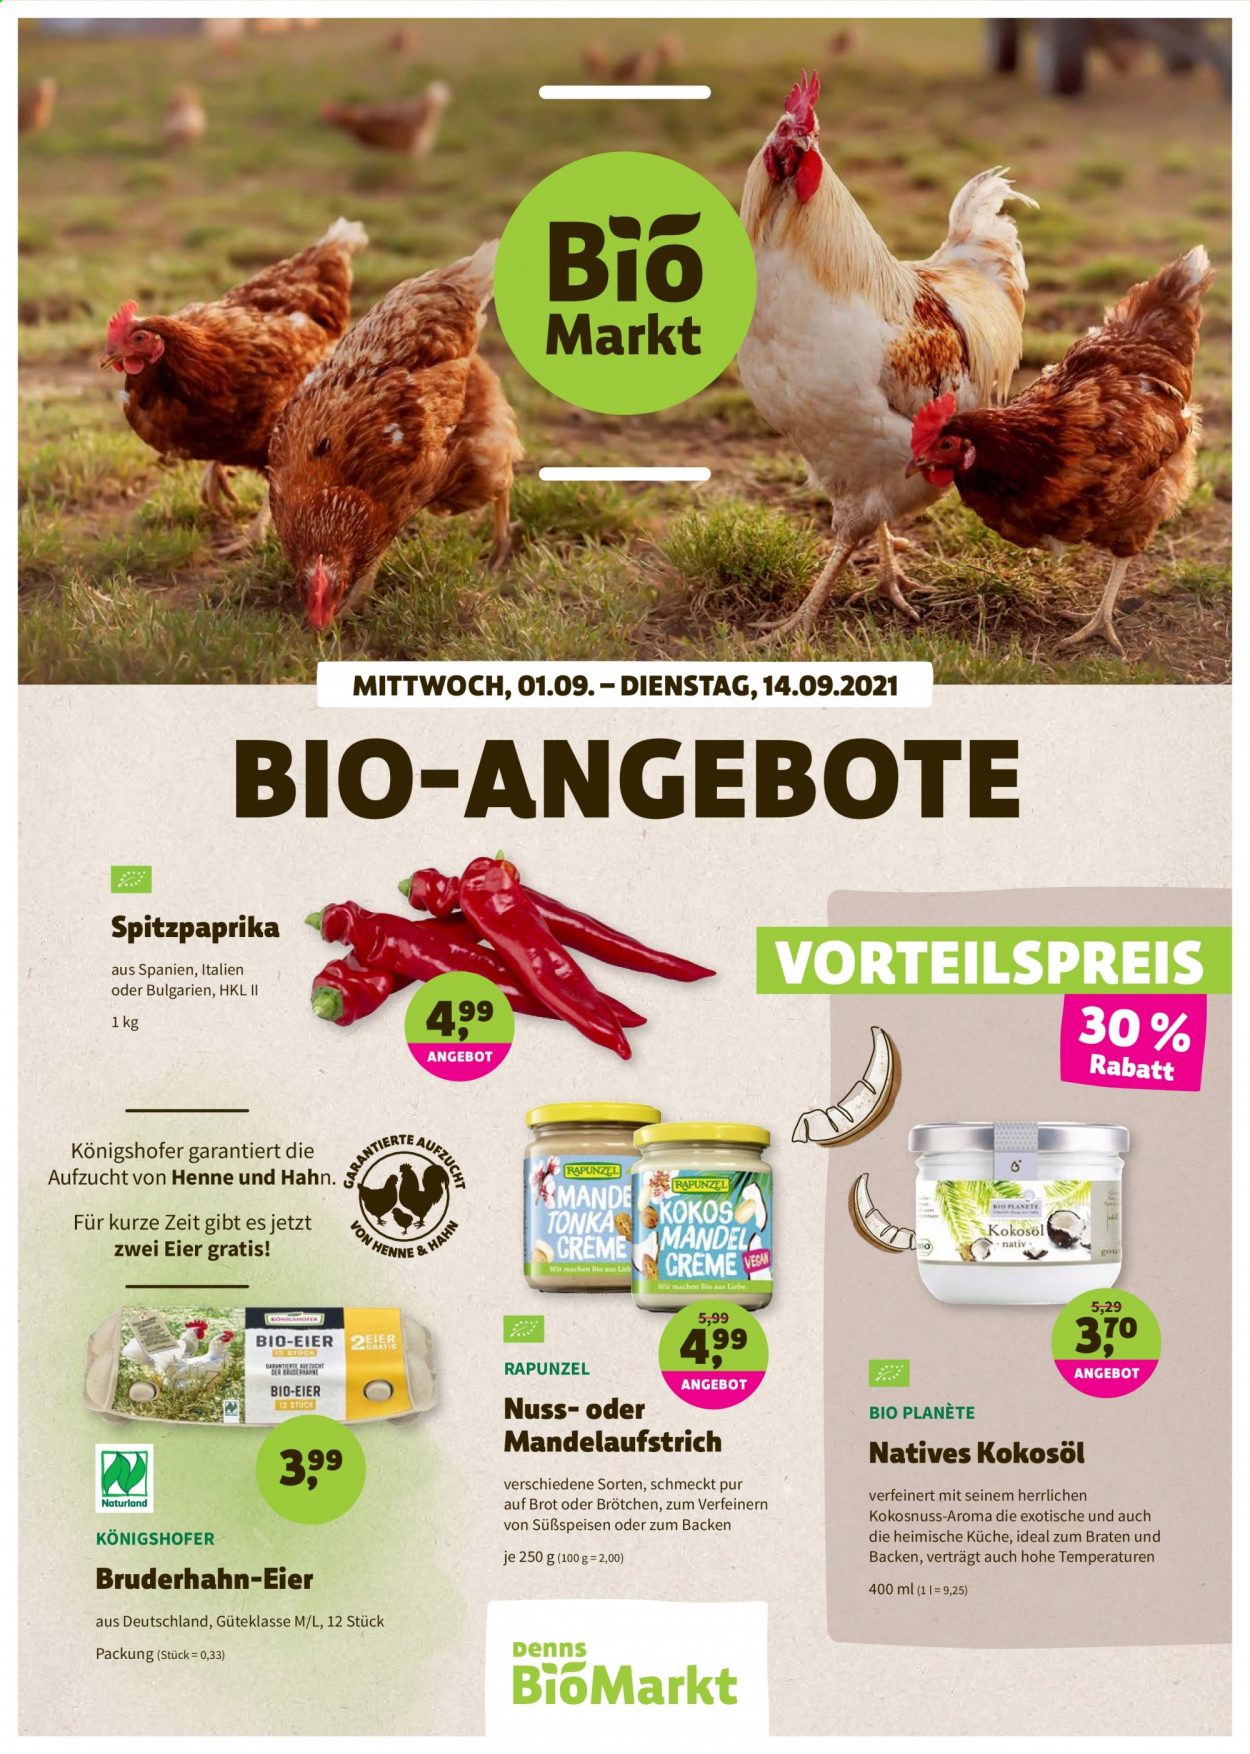 thumbnail - Prospekte BioMarkt - 1.09.2021 - 14.09.2021 - Produkte in Aktion - Paprika, Spitzpaprika, Brötchen, Eier, Kokosnussöl. Seite 1.